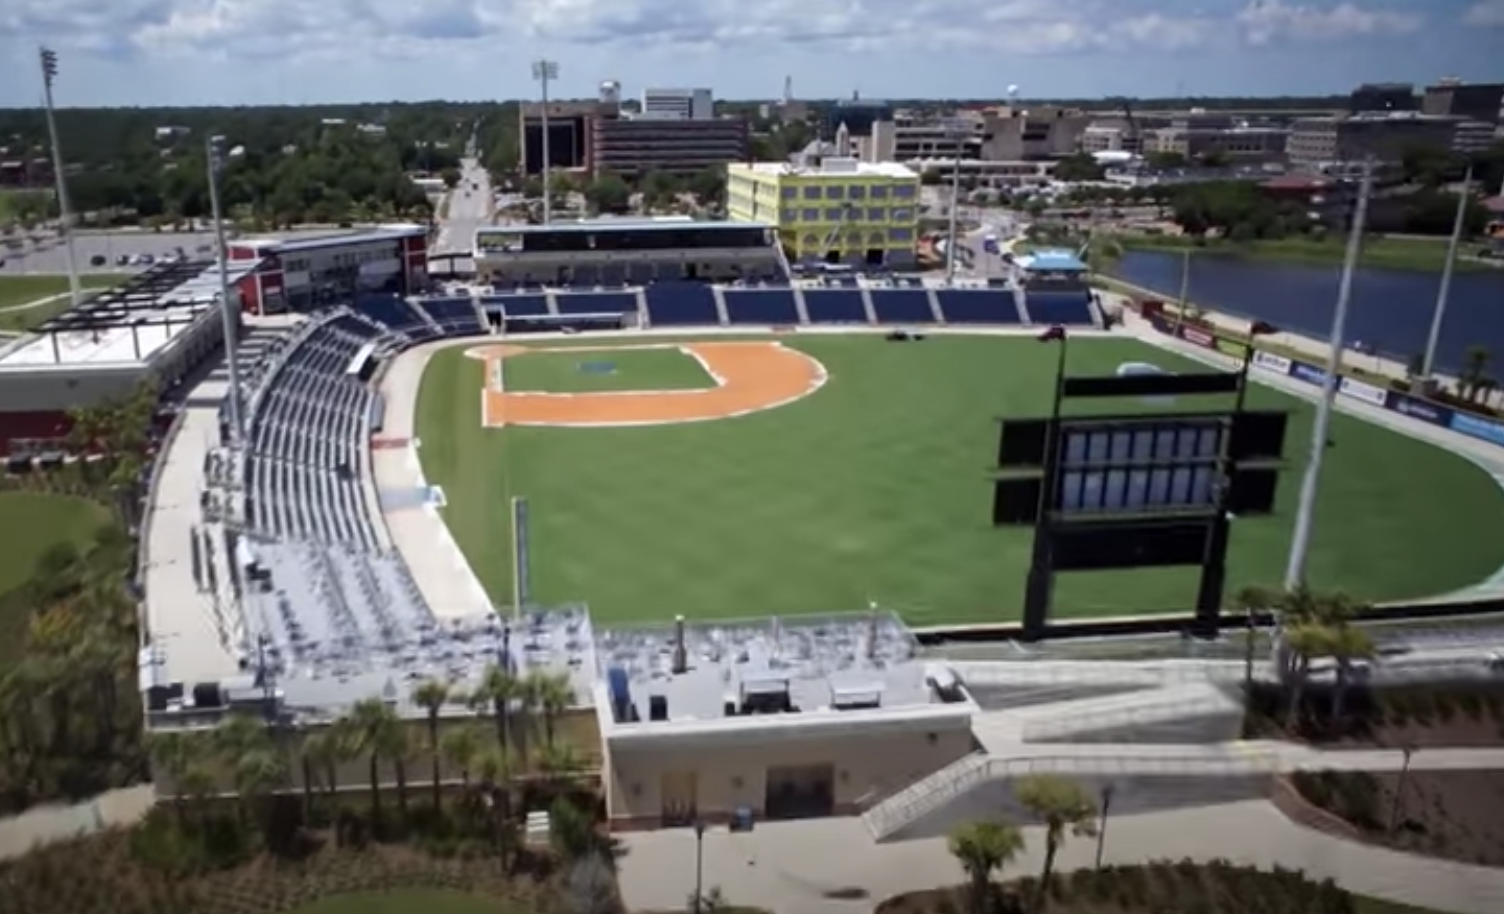 Pensacola Blue Wahoos list stadium on Airbnb for $1,500 per night